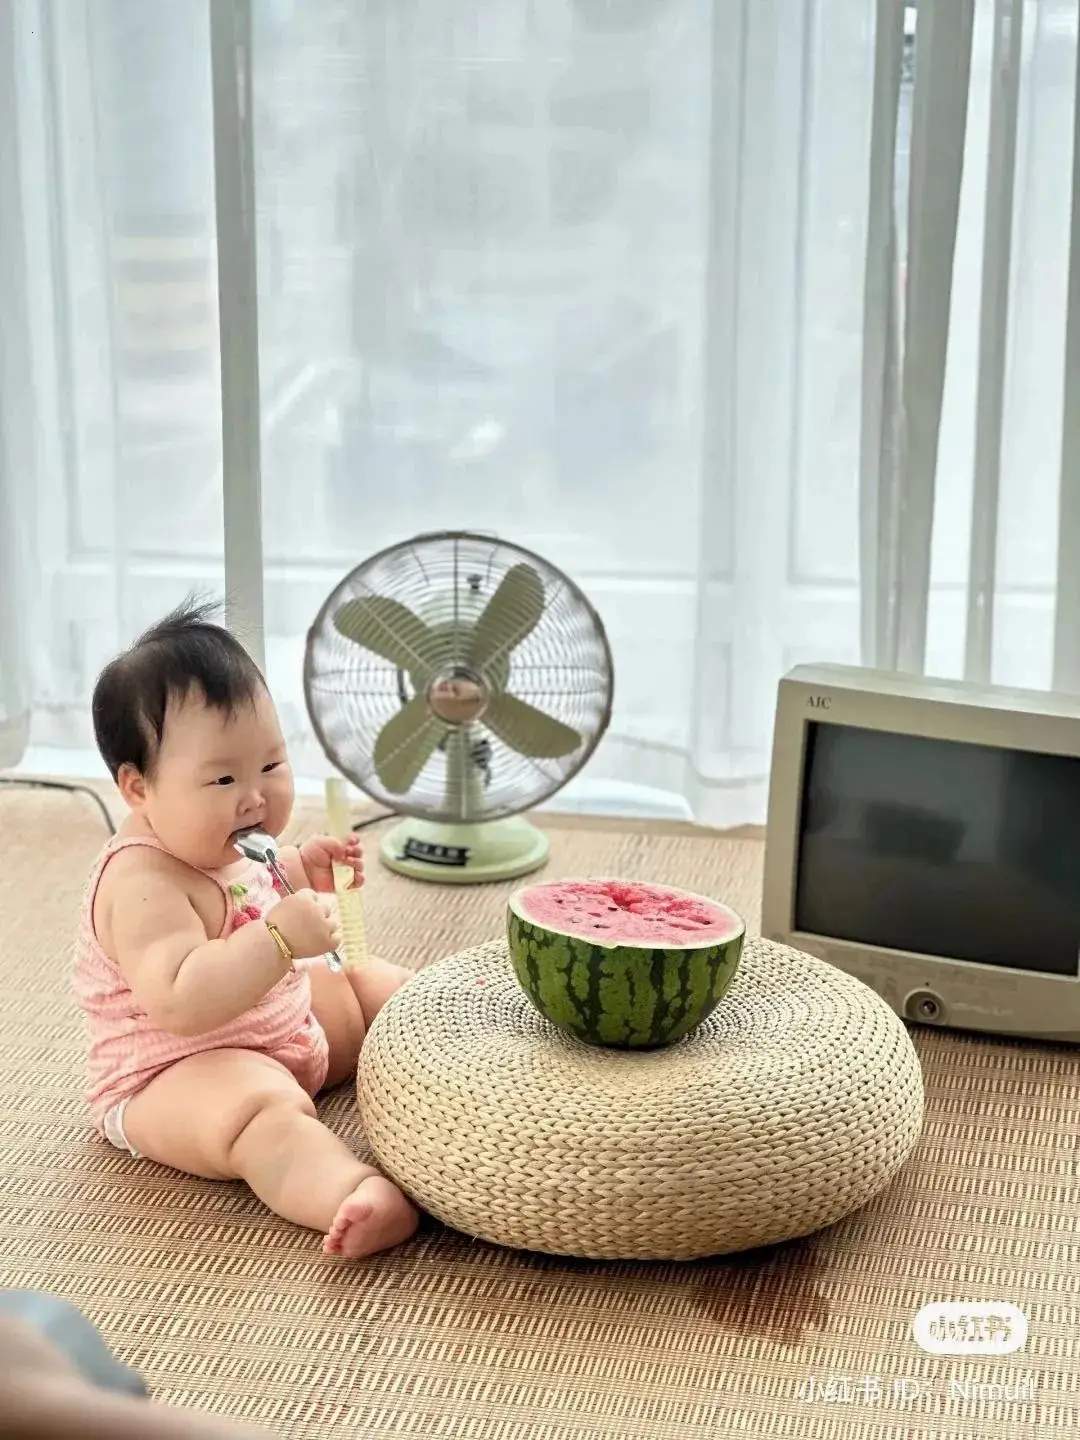 The Adorable Delight: A Baby’s Joyful Encounter with a Watermelon